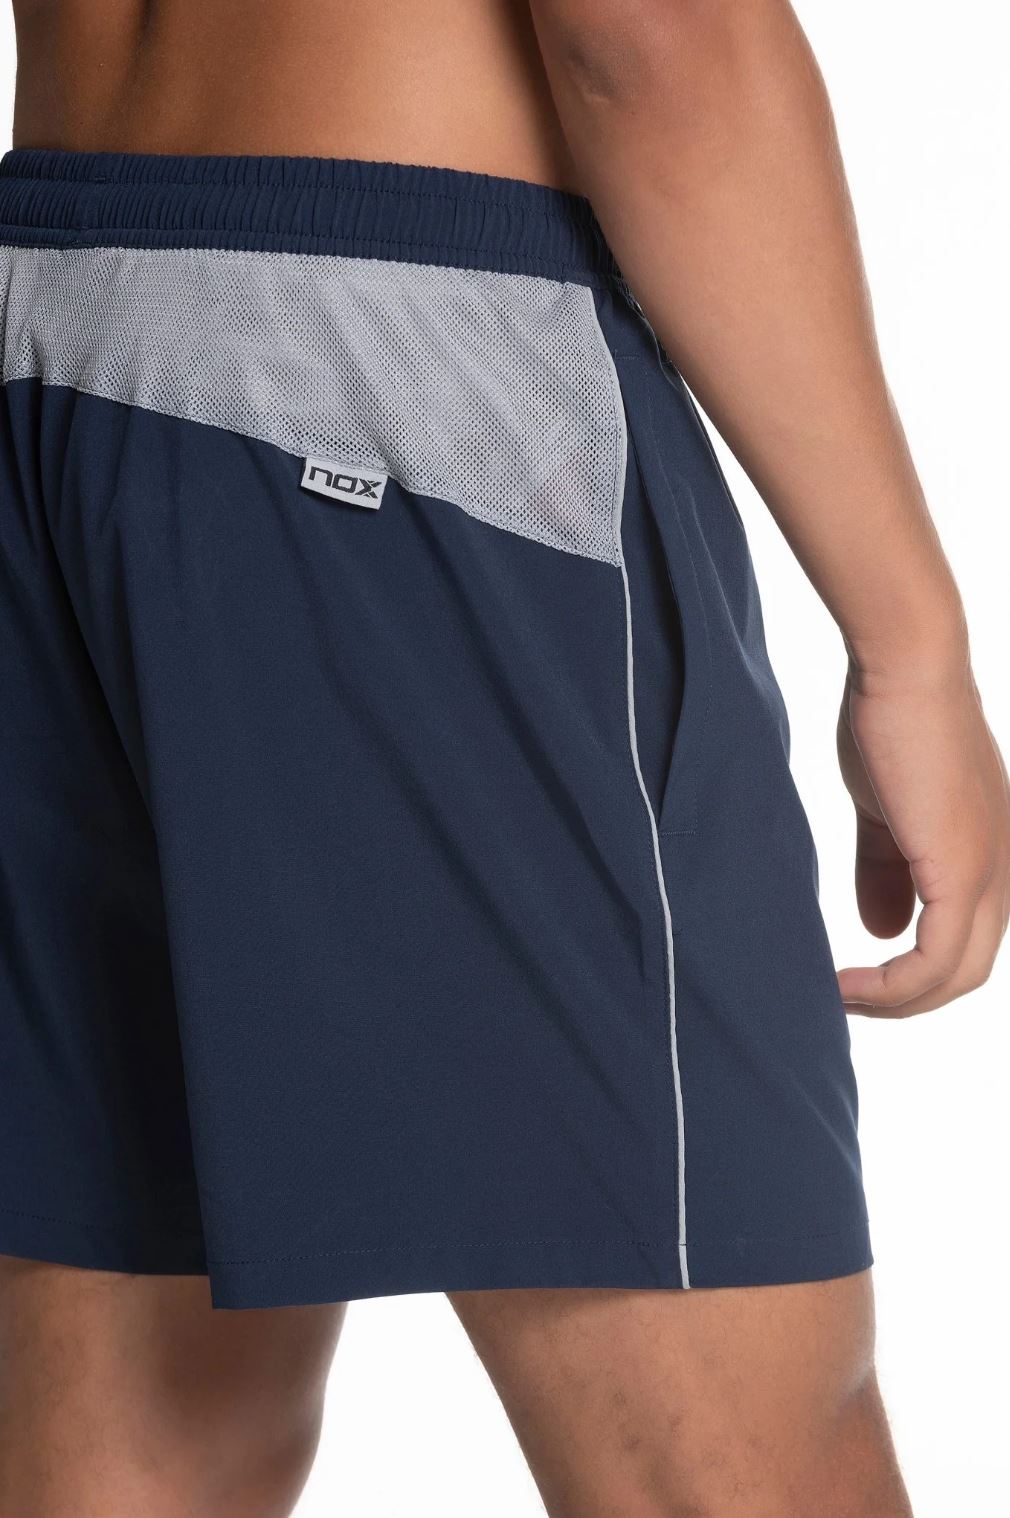 Nox Padel Shorts (Navy Blue)